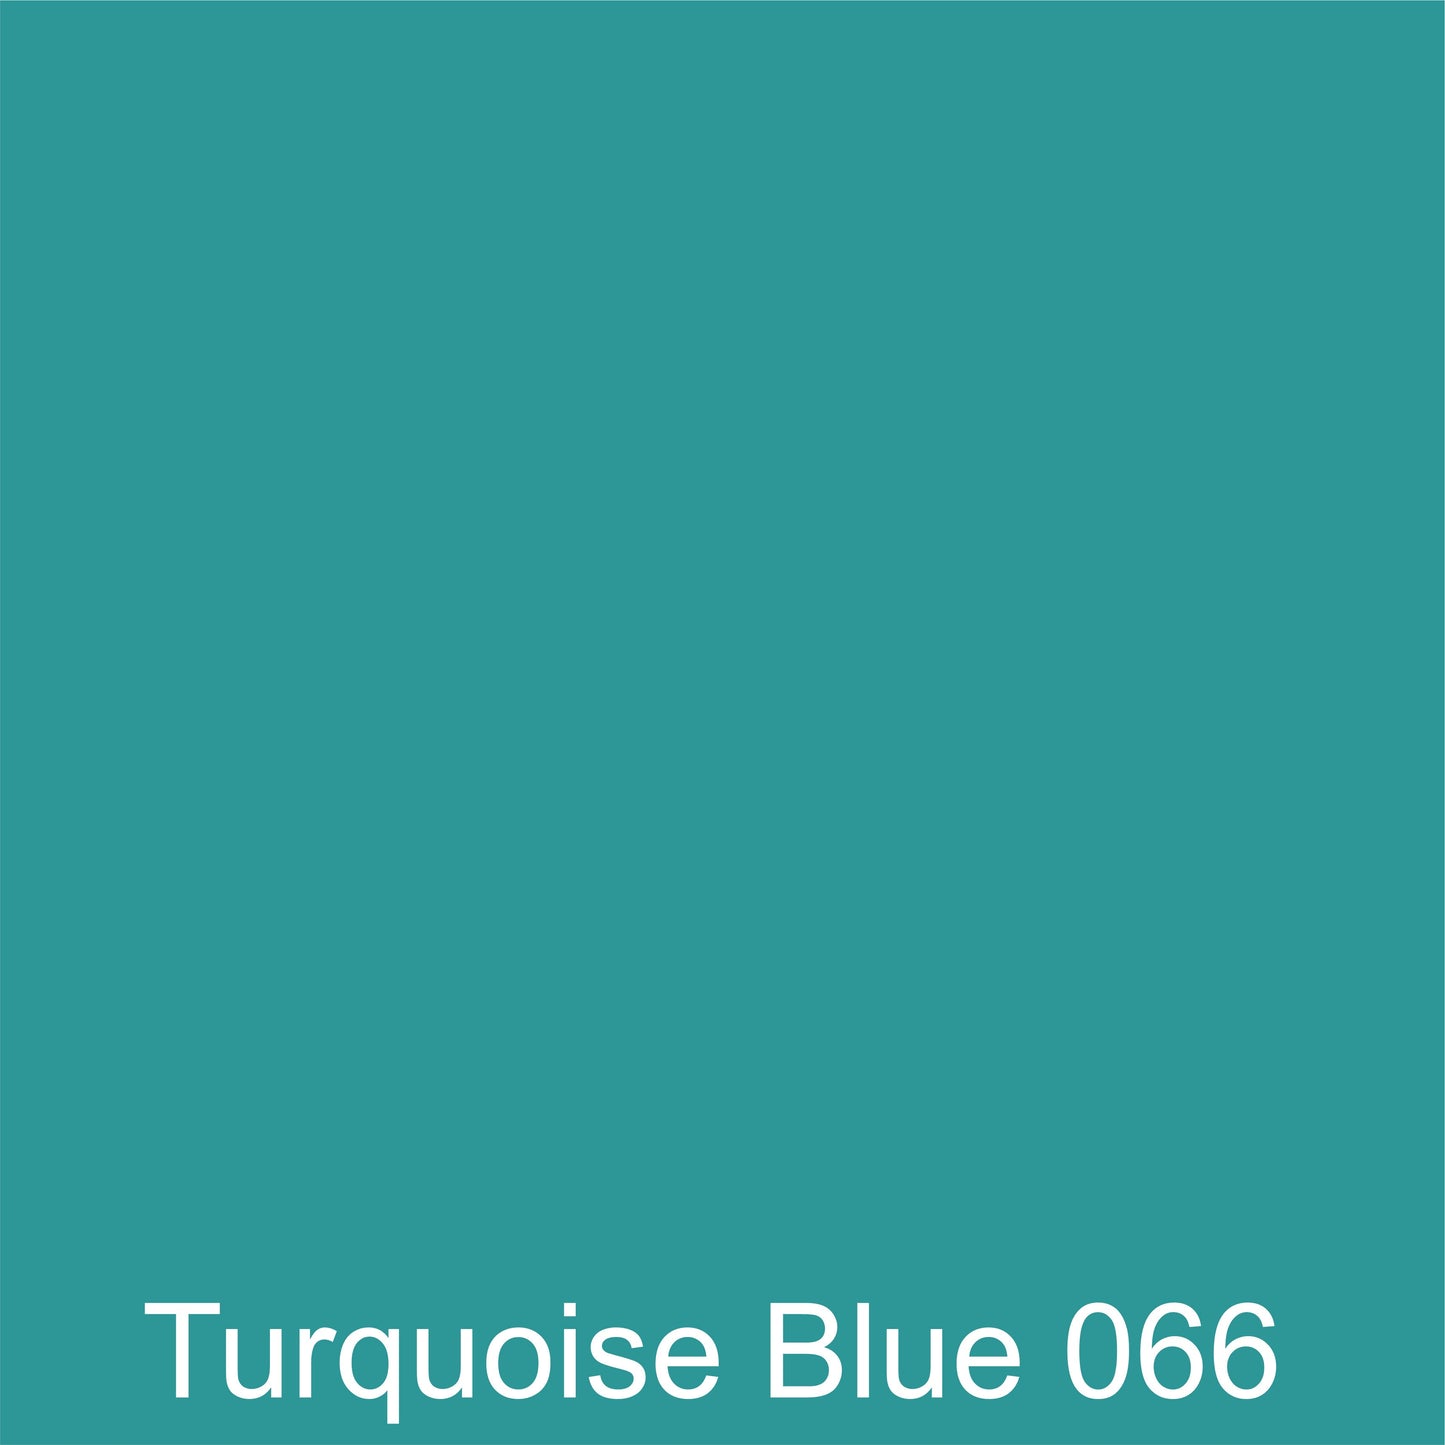 Oracal 651 Matt :- Turquoise Blue - 066